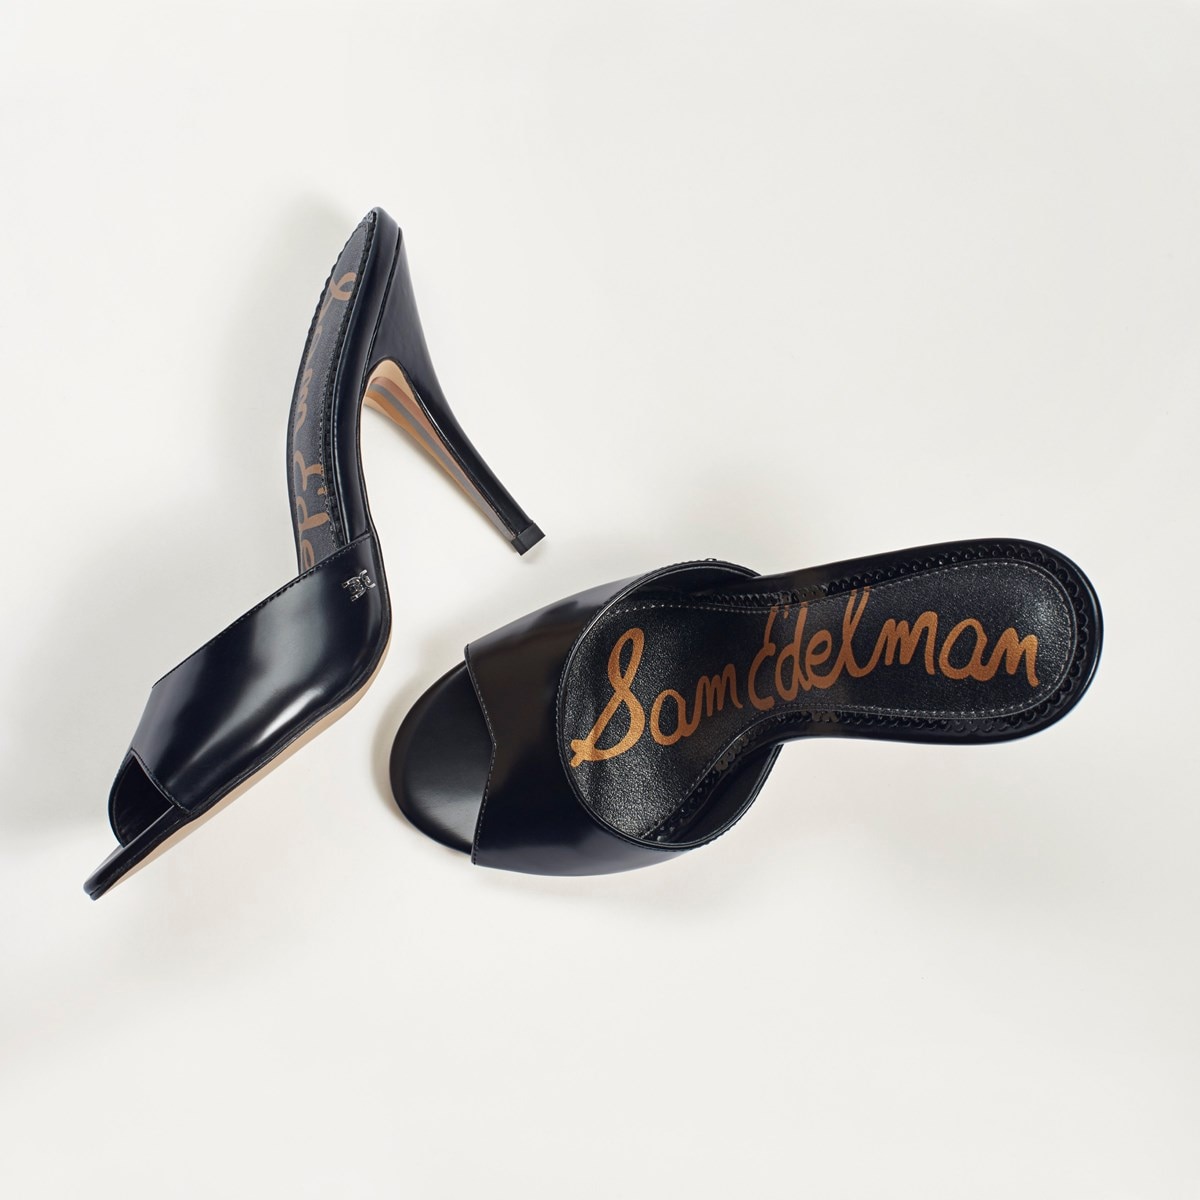 Details about   Sam Edelman Pompei black leather mesh peep open toe high heel lace up sandal new